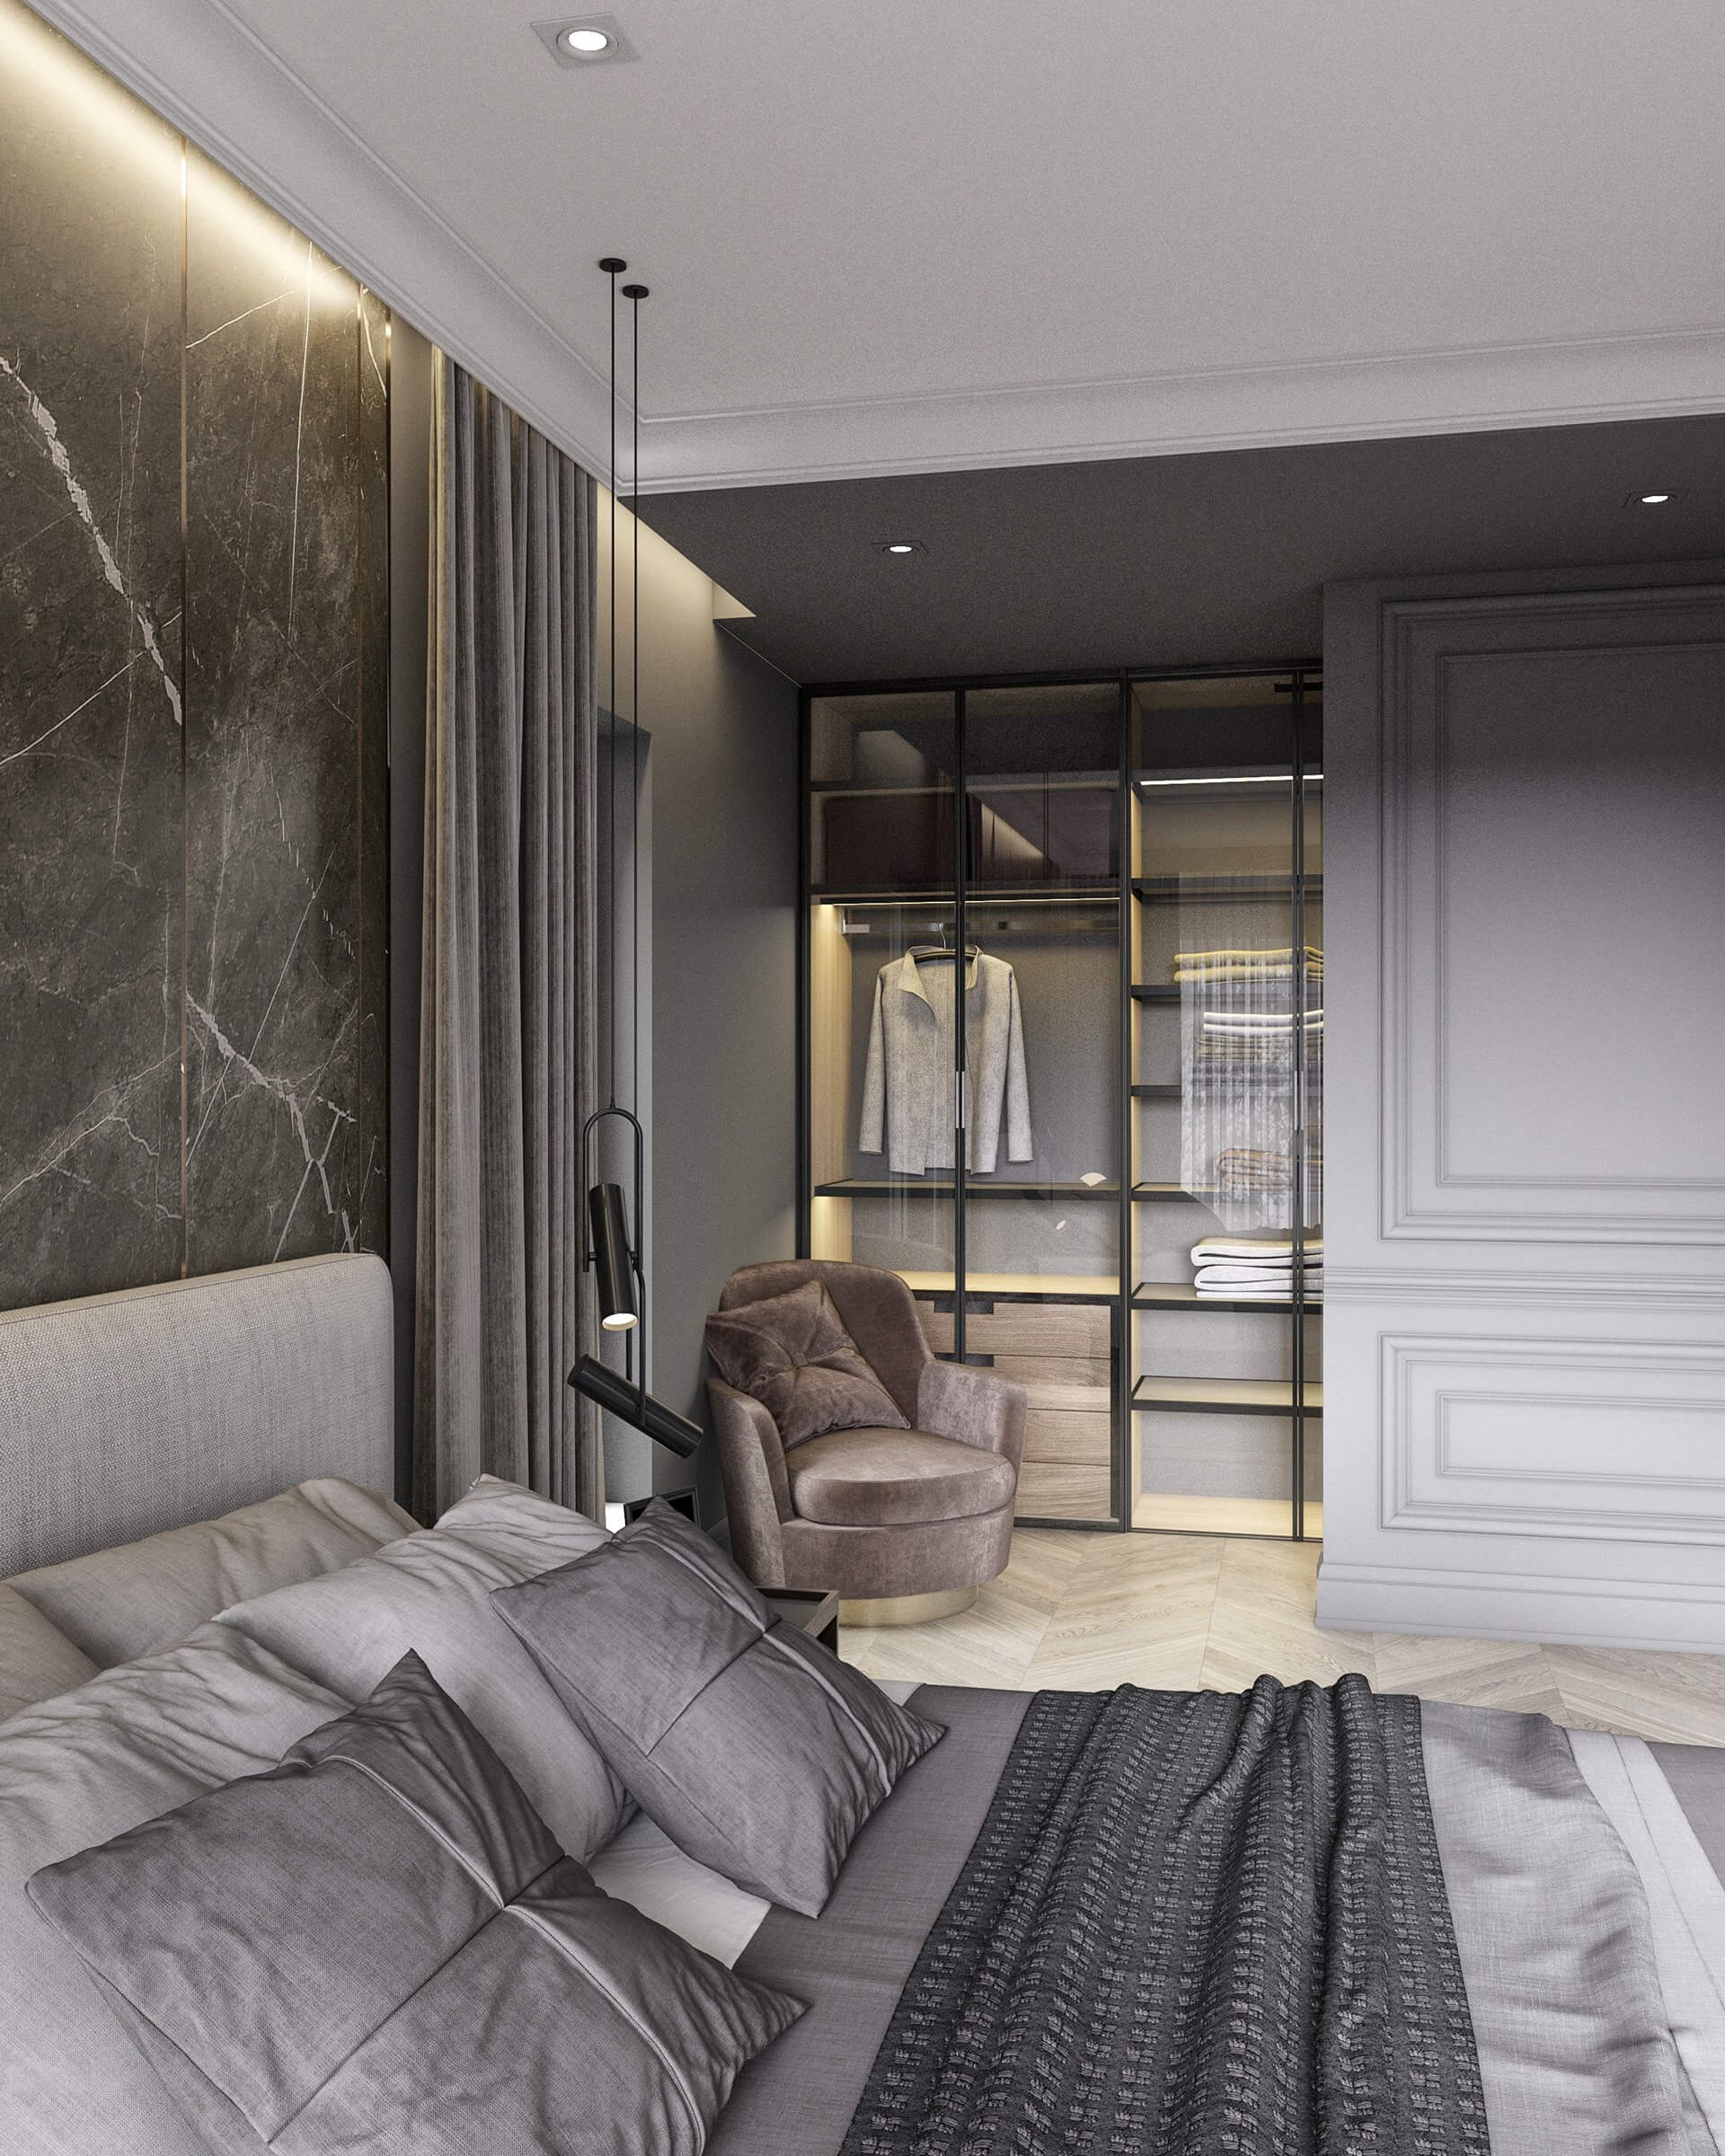 Stylish interior concept design bedroom with wardrobe - cgi visualization